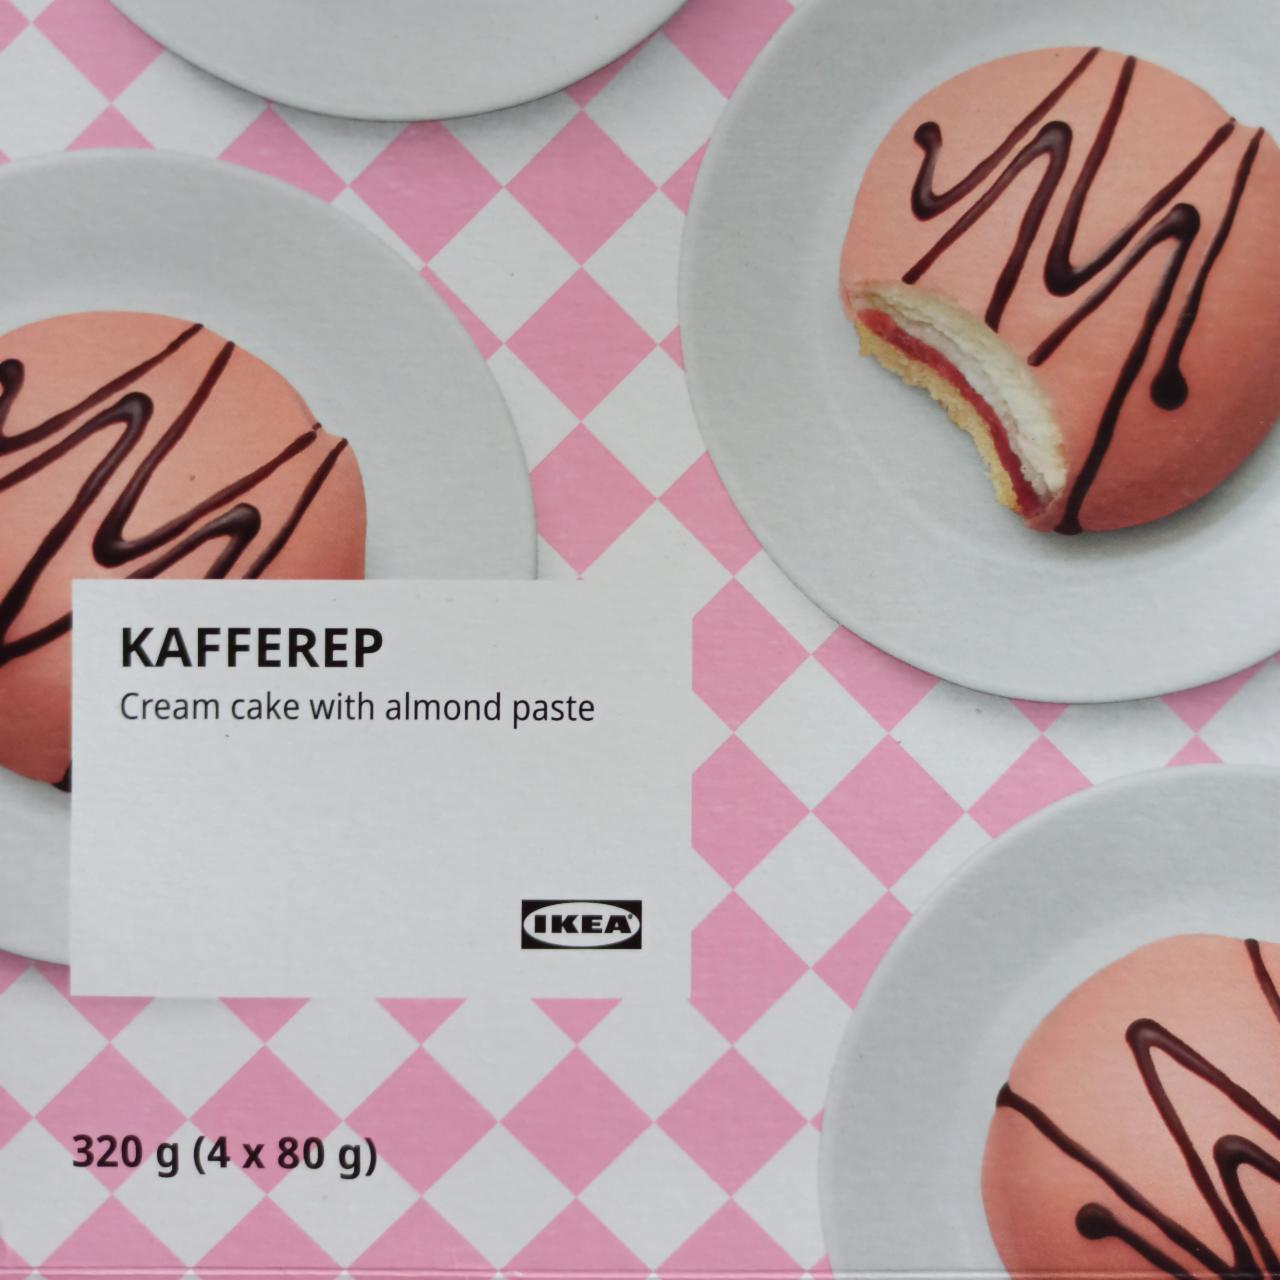 Fotografie - Kafferep cream cake with almond paste Ikea